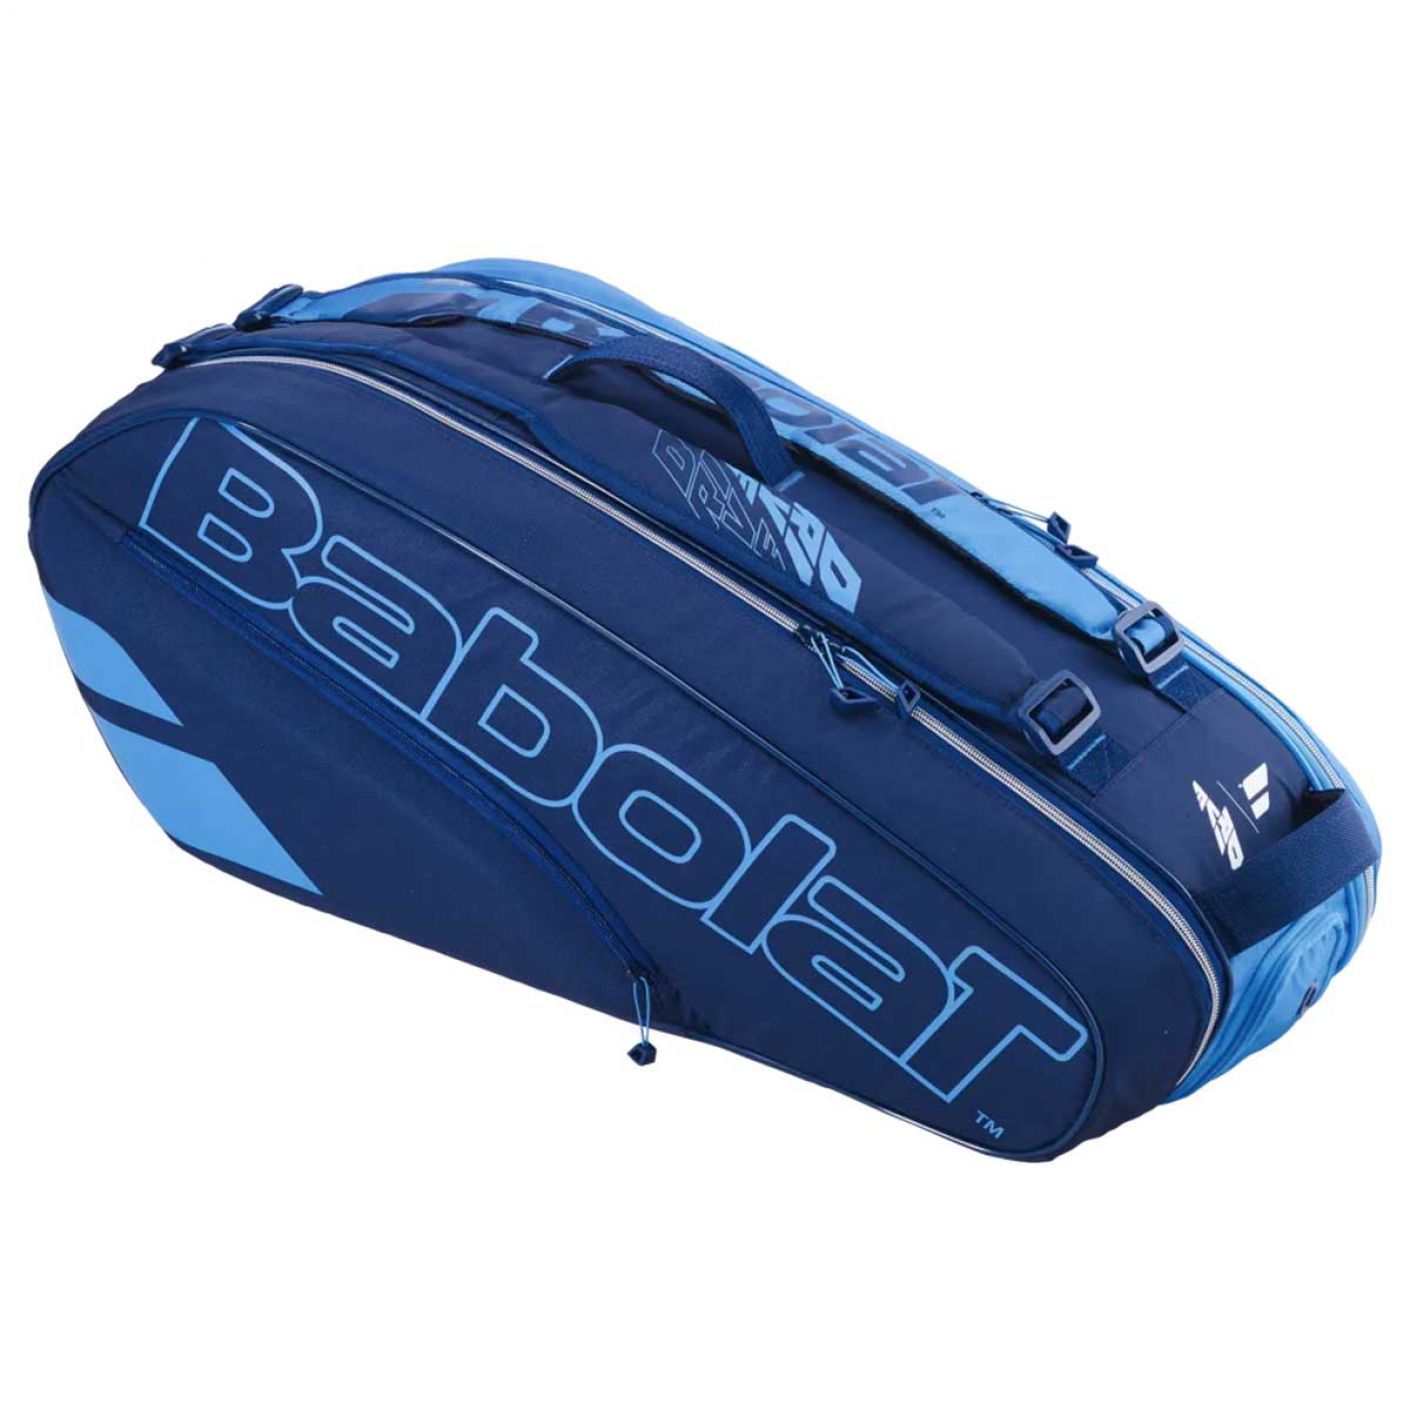 Babolat Rh X 6 Pure Drive Tennis Bag